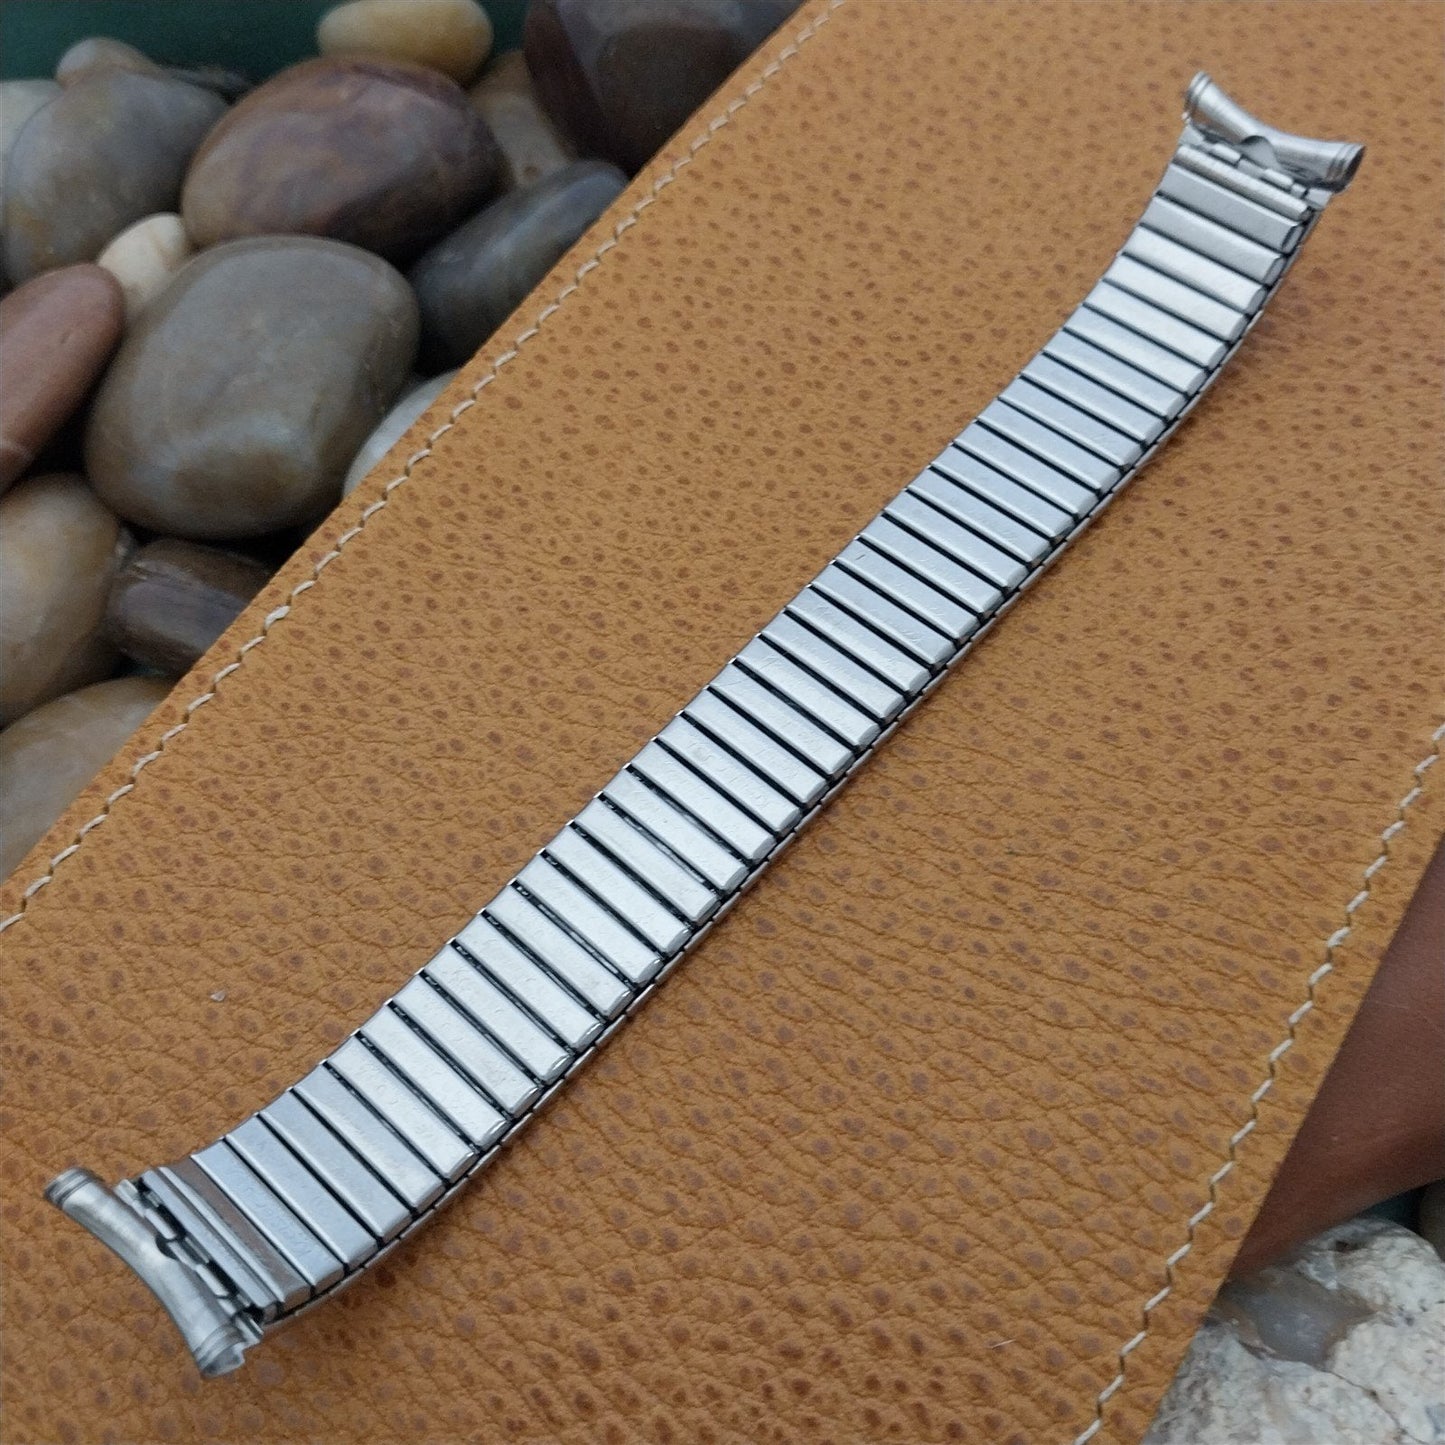 19mm 18mm Kreisler Stainless Steel Long DuraFlex 1960s Vintage Watch Band nos